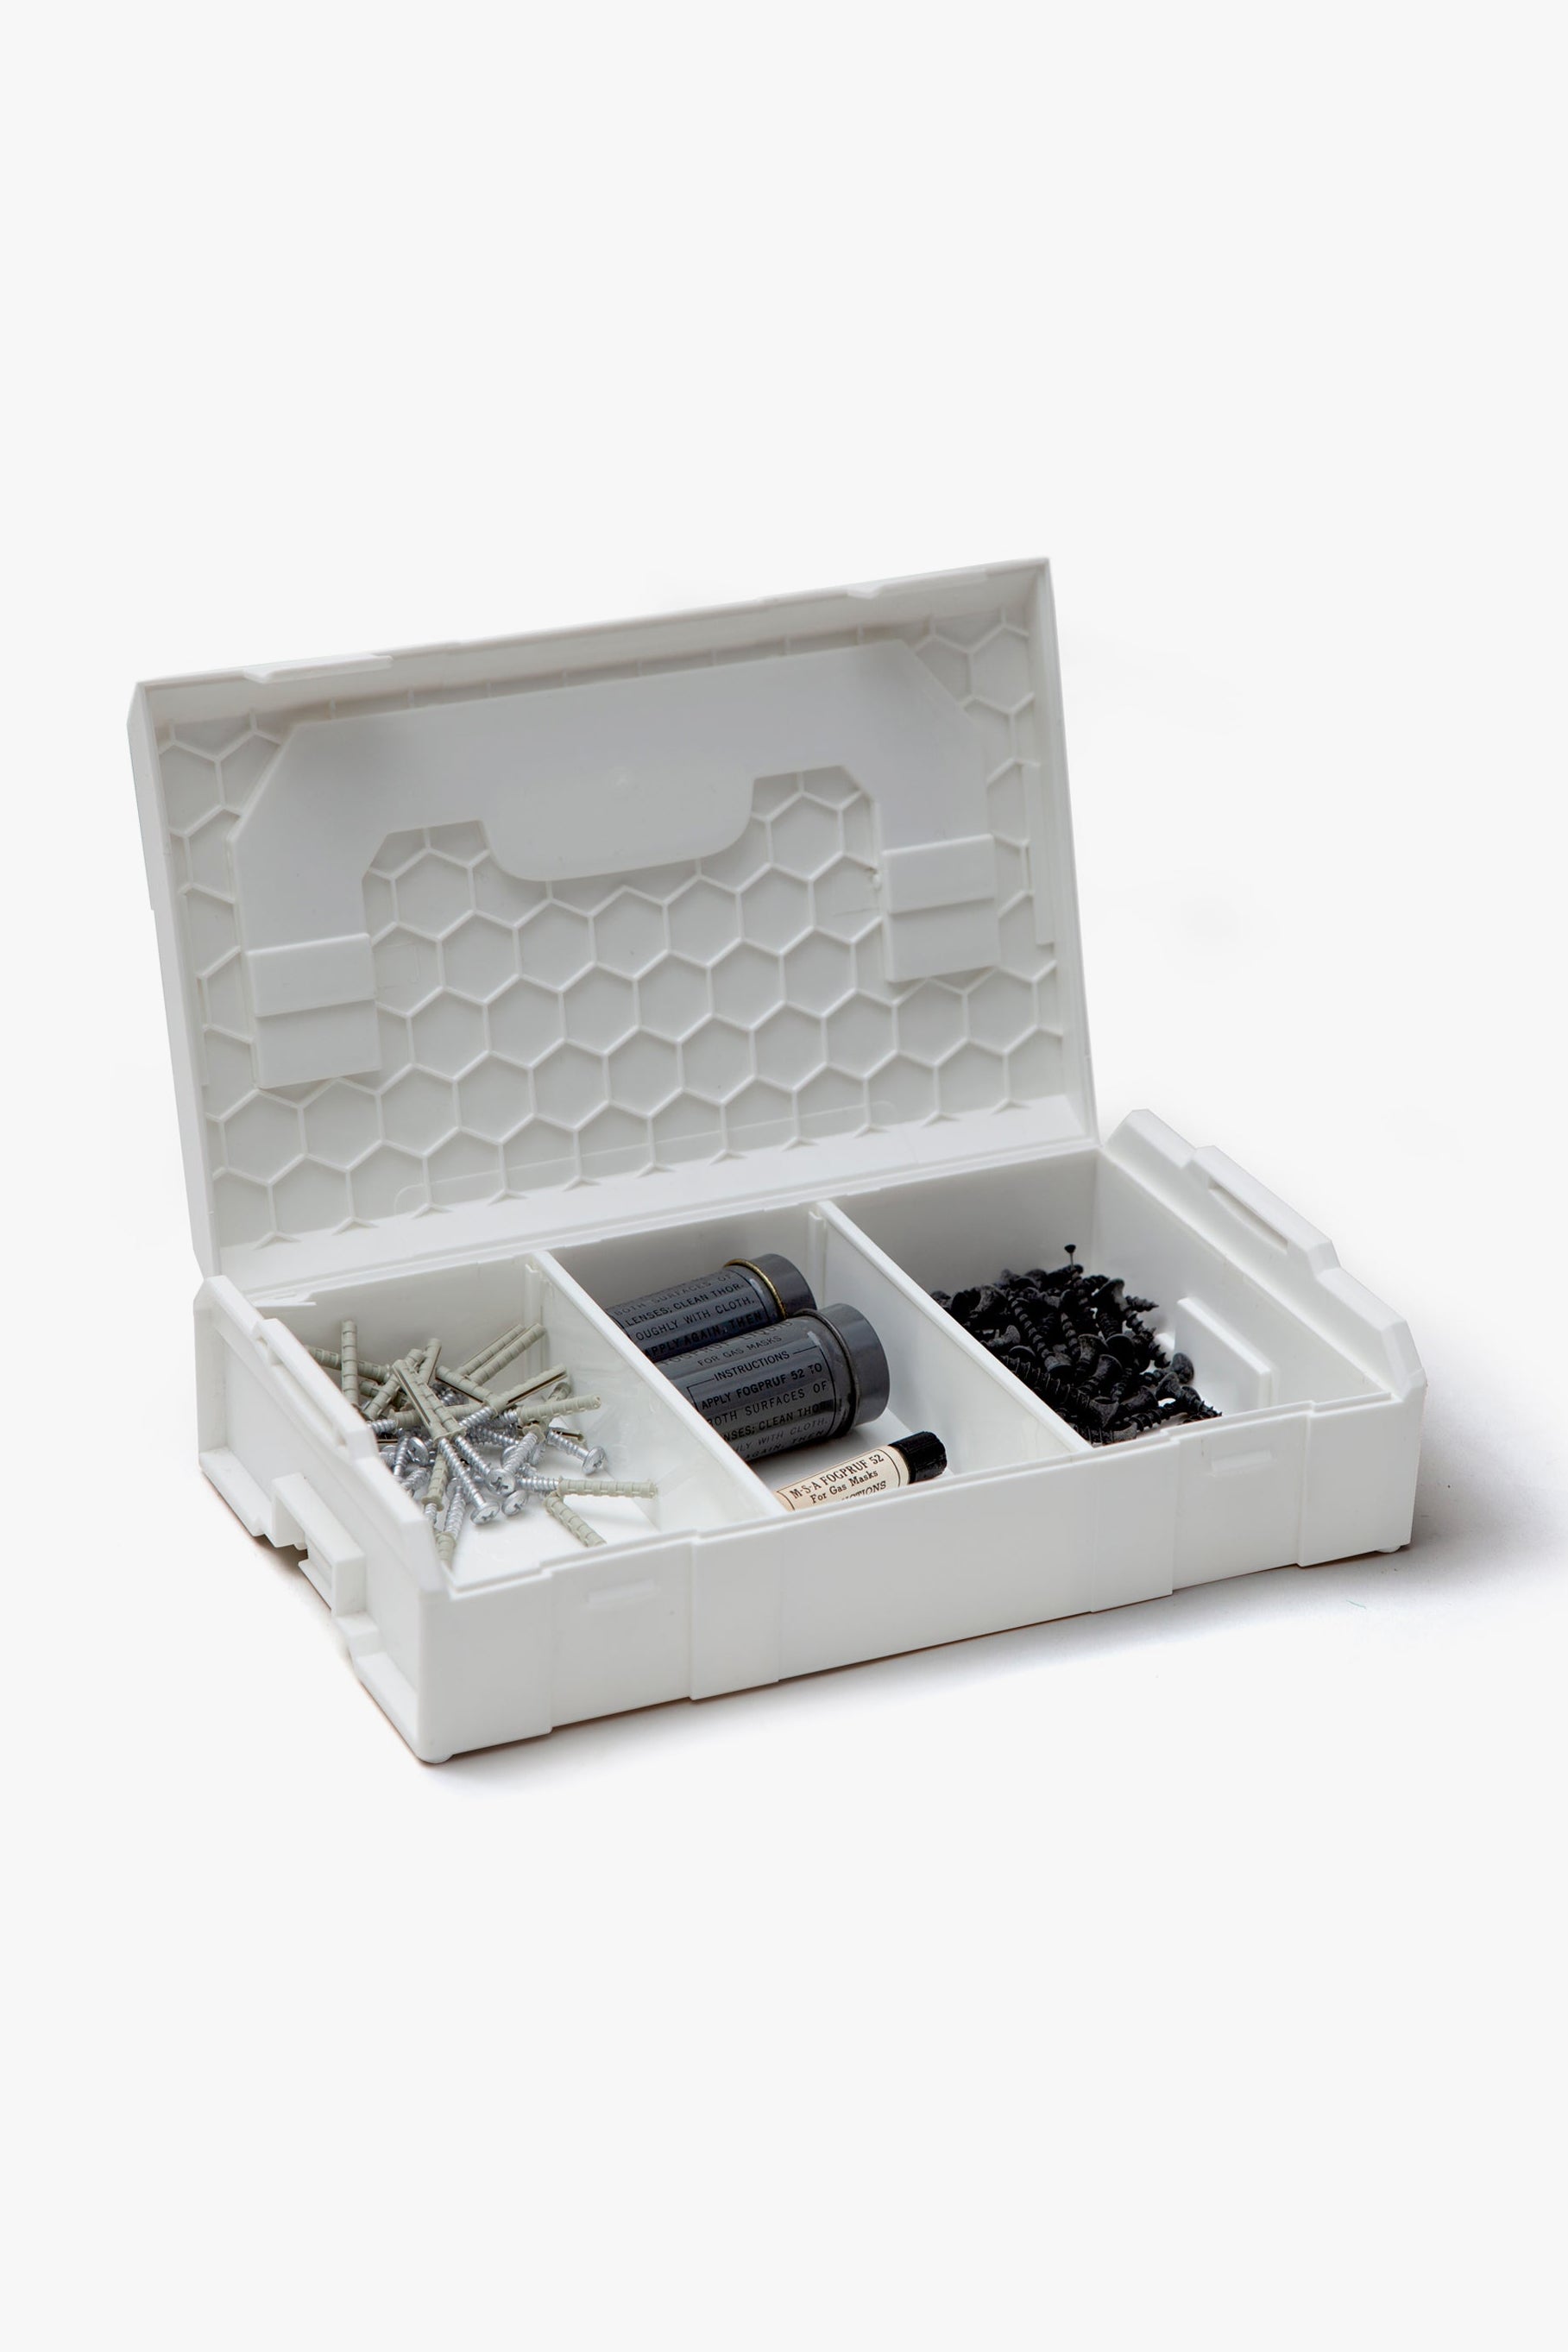 Connectable tool box white-Puebco-[interior]-[design]-KIOSK48TH